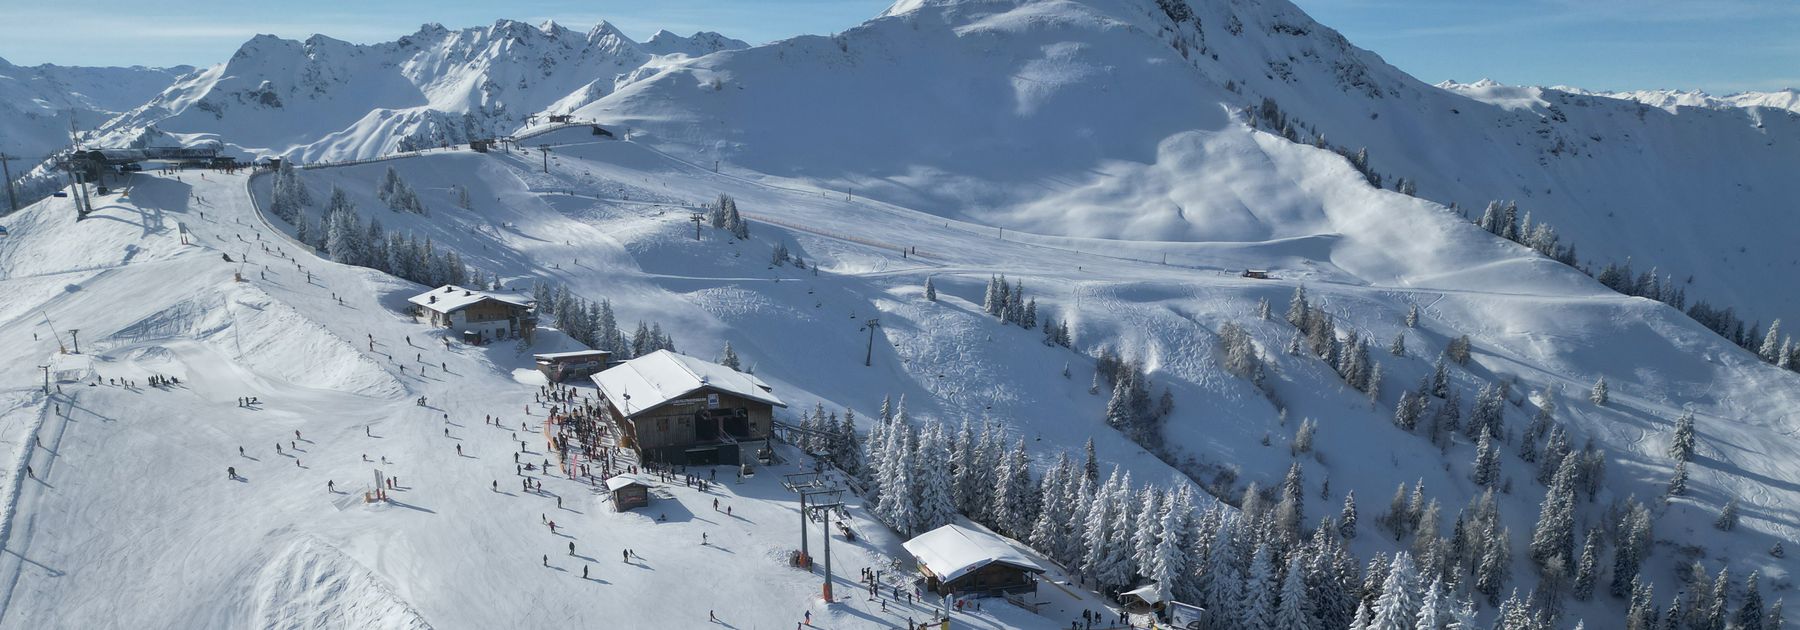 Pisten Ski Juwel Alpbachtal Wildschönau